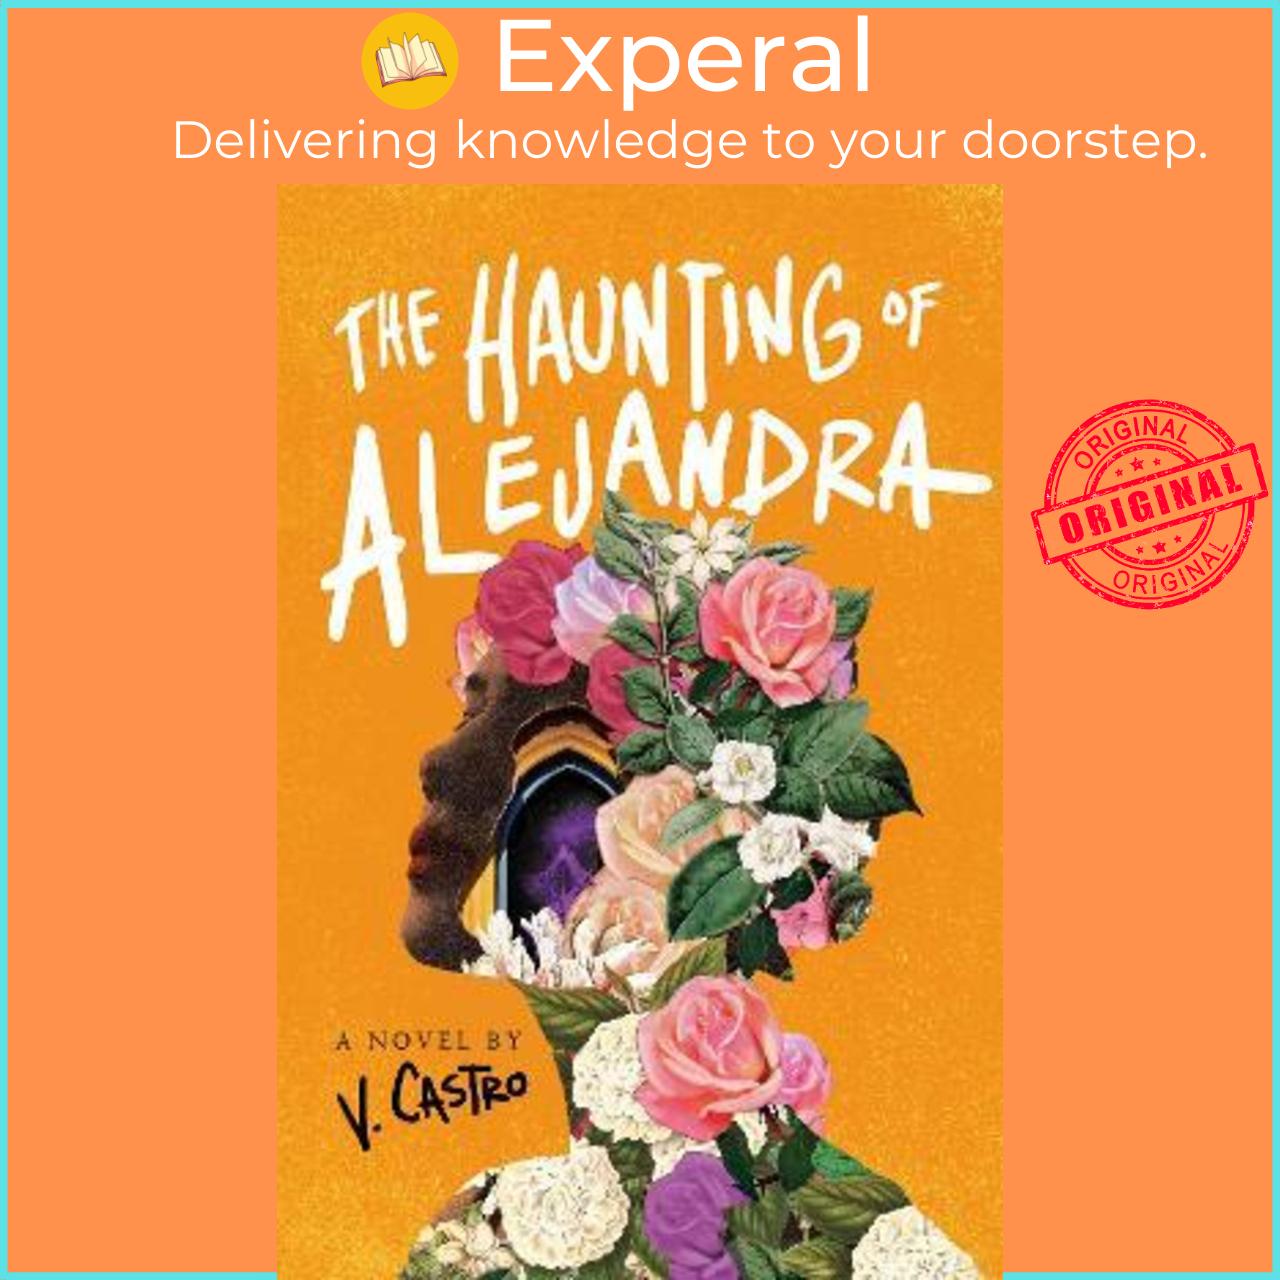 Sách - The Haunting of Alejandra : A Novel by V. Castro (US edition, hardcover)